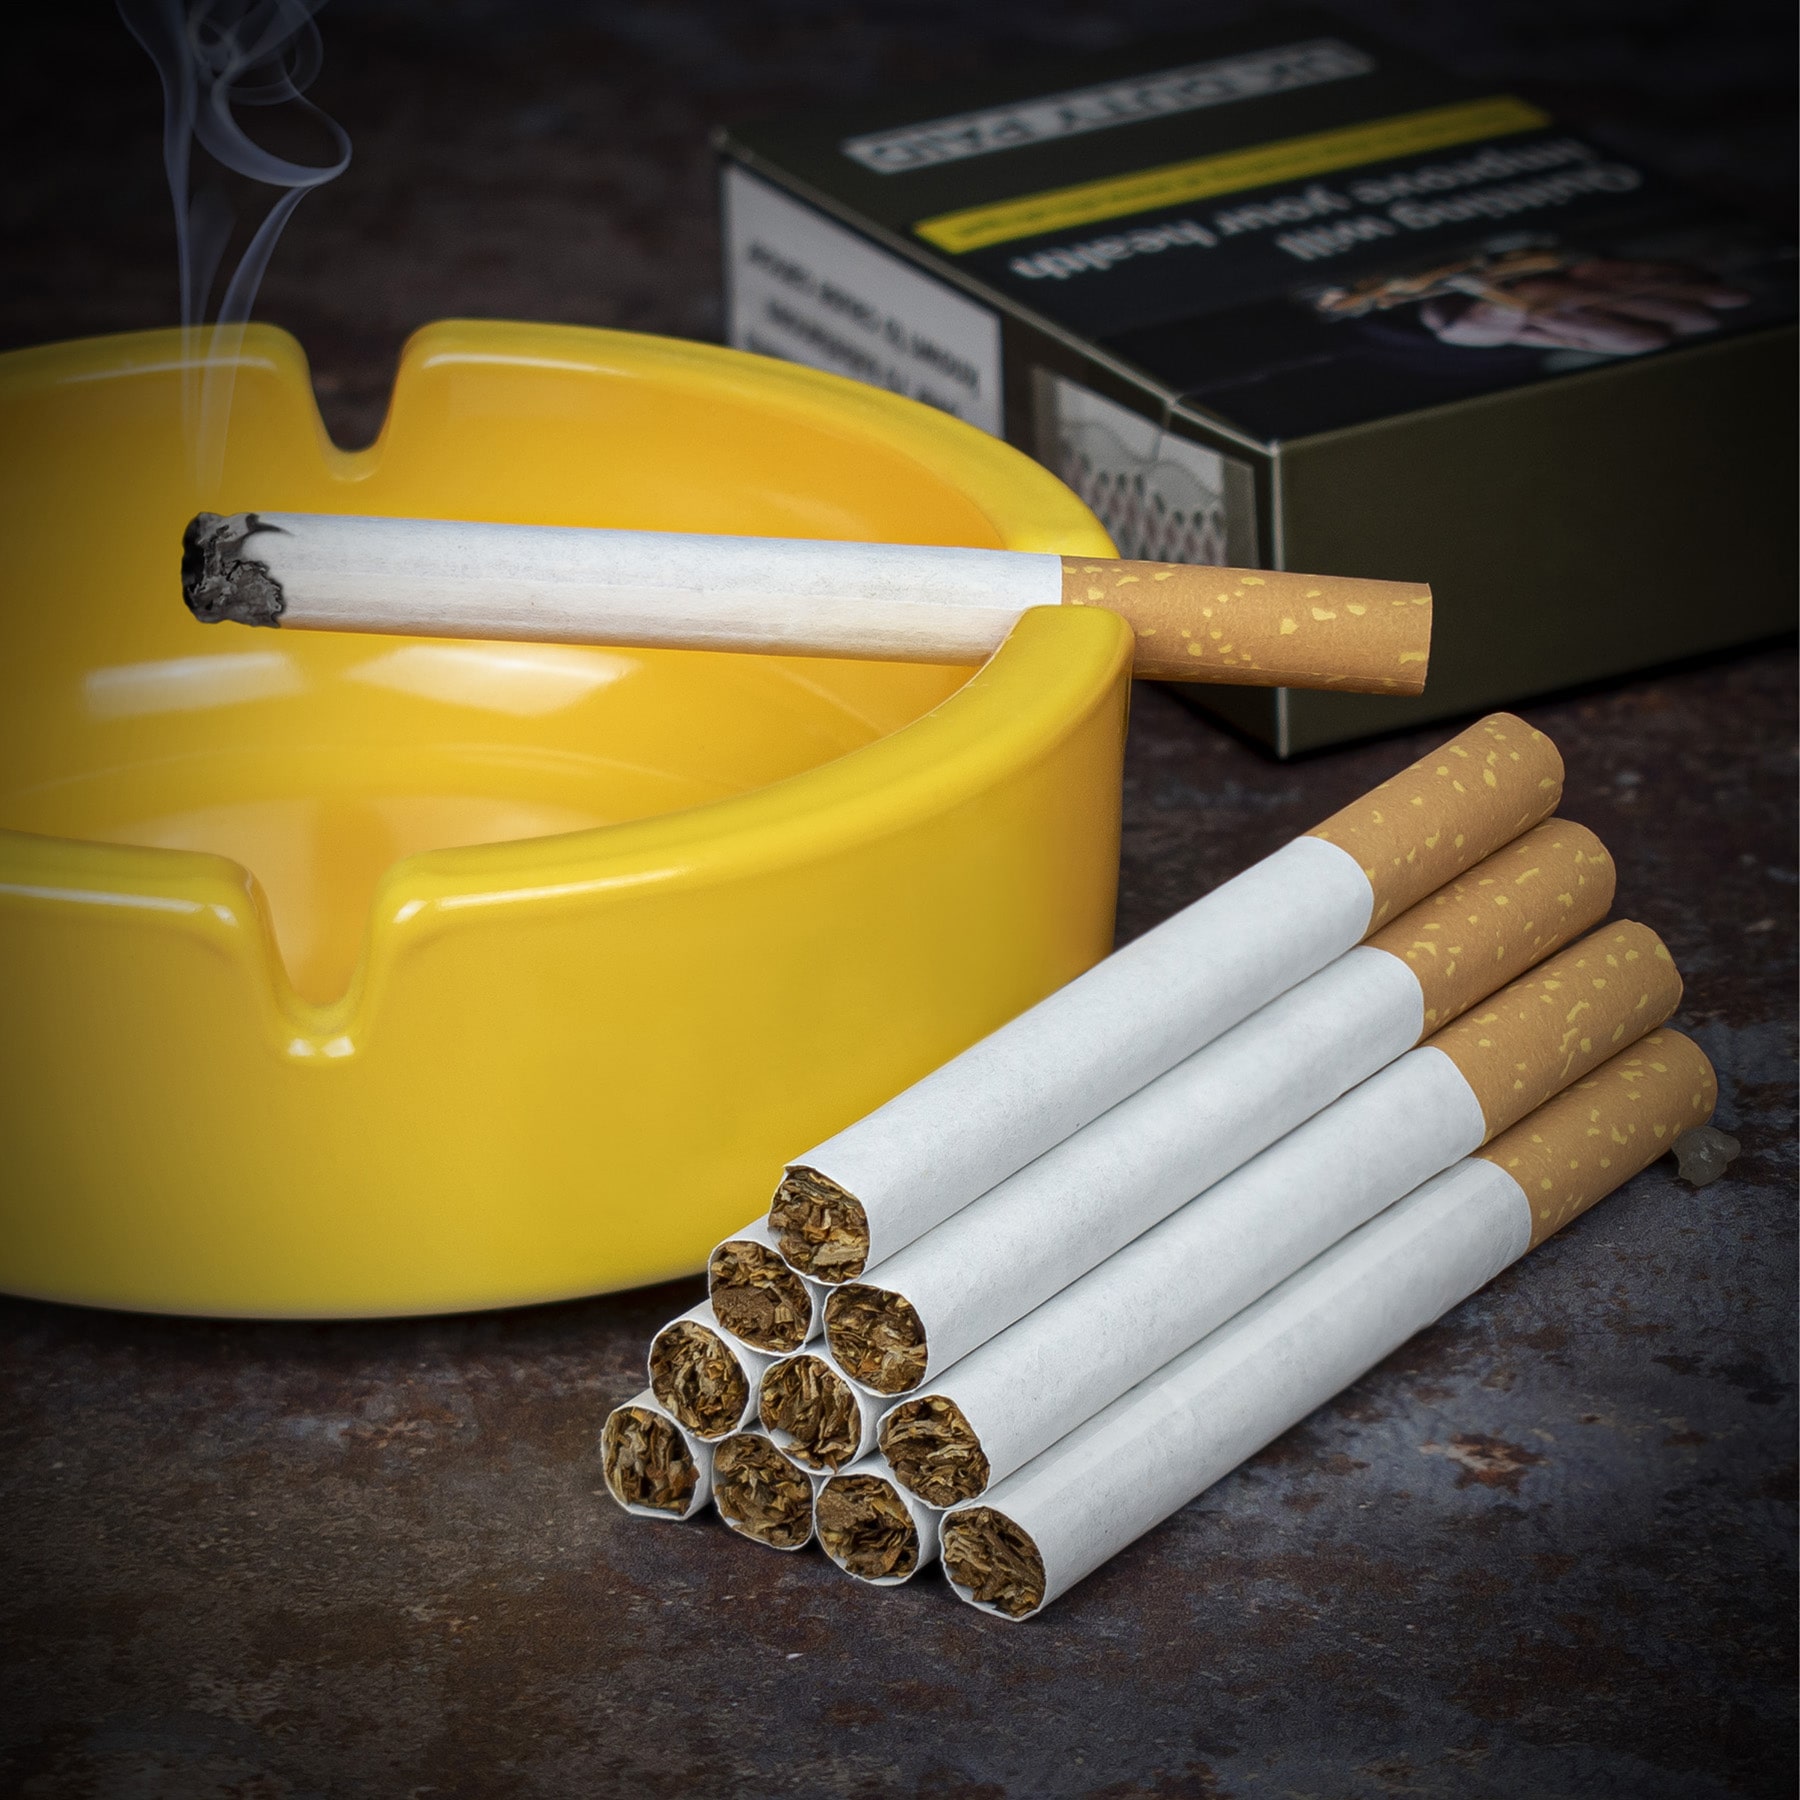 Smoke-King UK Tobacconist - Cigars, Cigarettes, Tobacco, Pipes